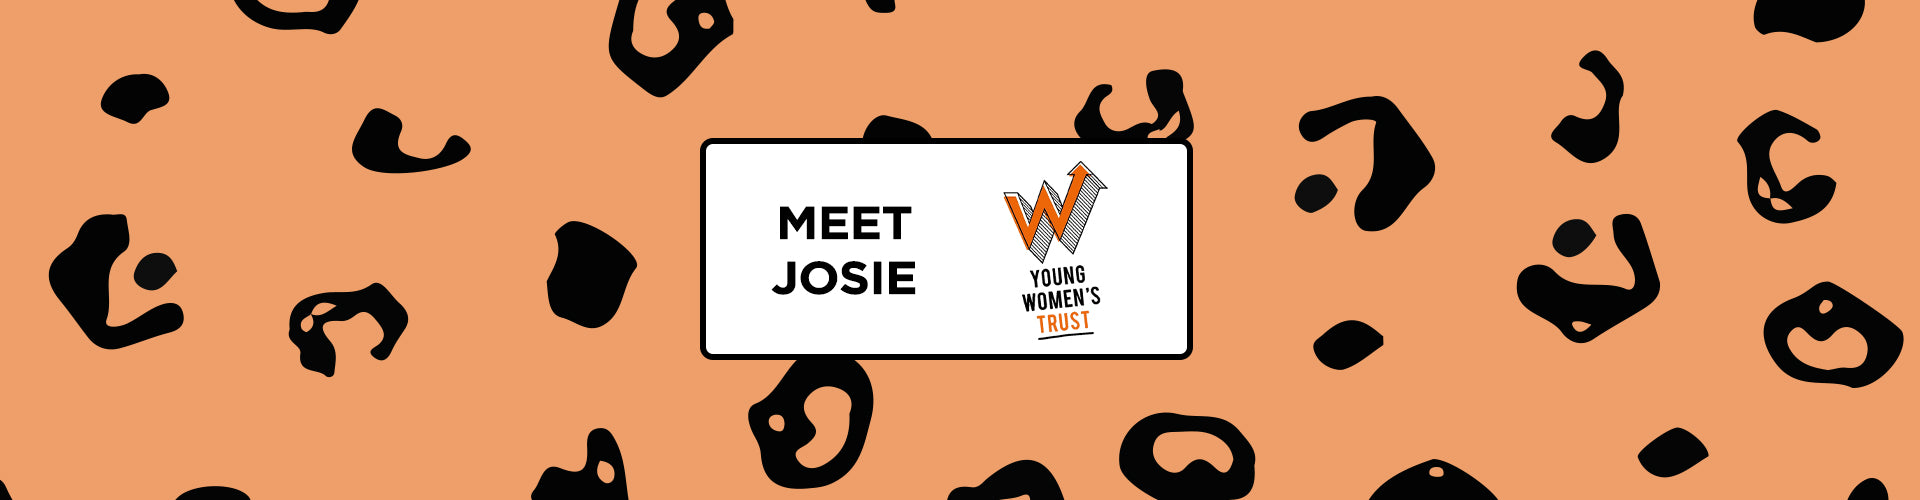 Meet Josie - Advisory Panel member for Young Women’s Trust